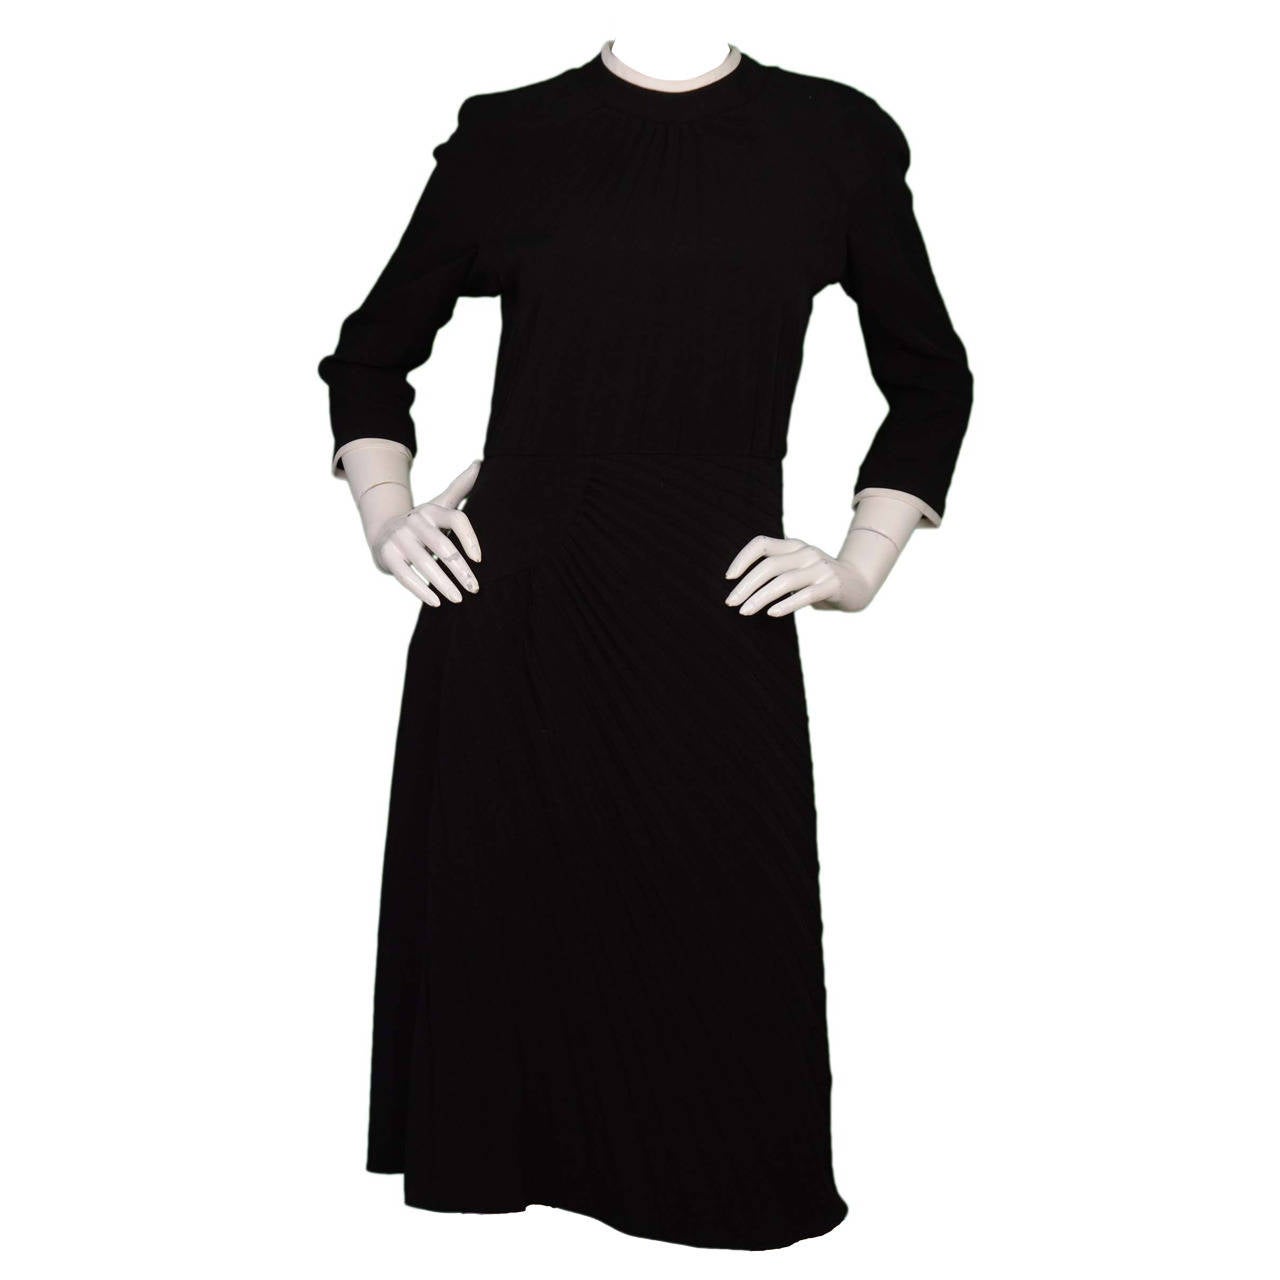 RUE DU MAIL Pleated Black & White 3/4 Sleeve Dress sz 38